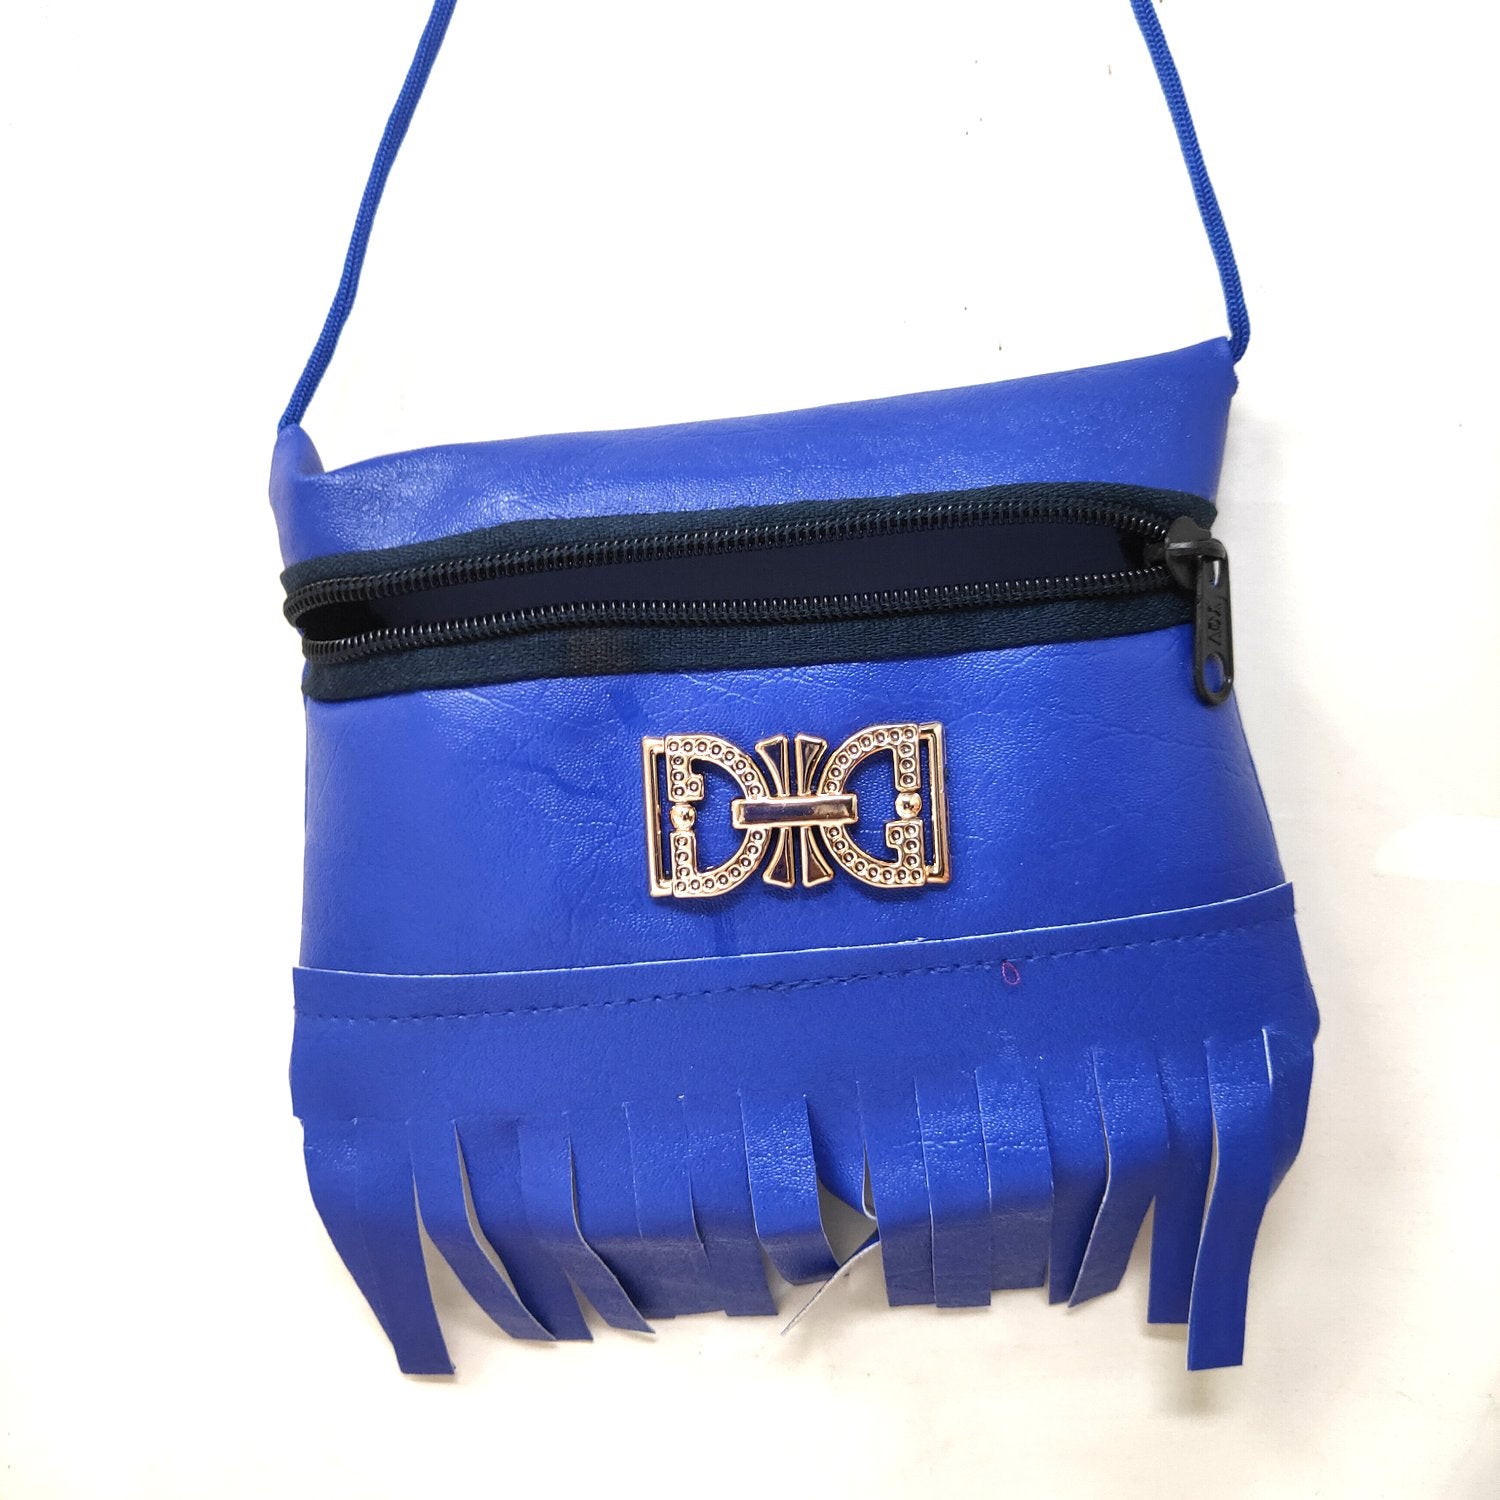 Buy SHOPO Faux Leather Women Handbag Shoulder Hobo Bag Purse (Long Strap Bag)  With Small Shoulder Bag And Wallet (3 In 1) Black at Amazon.in